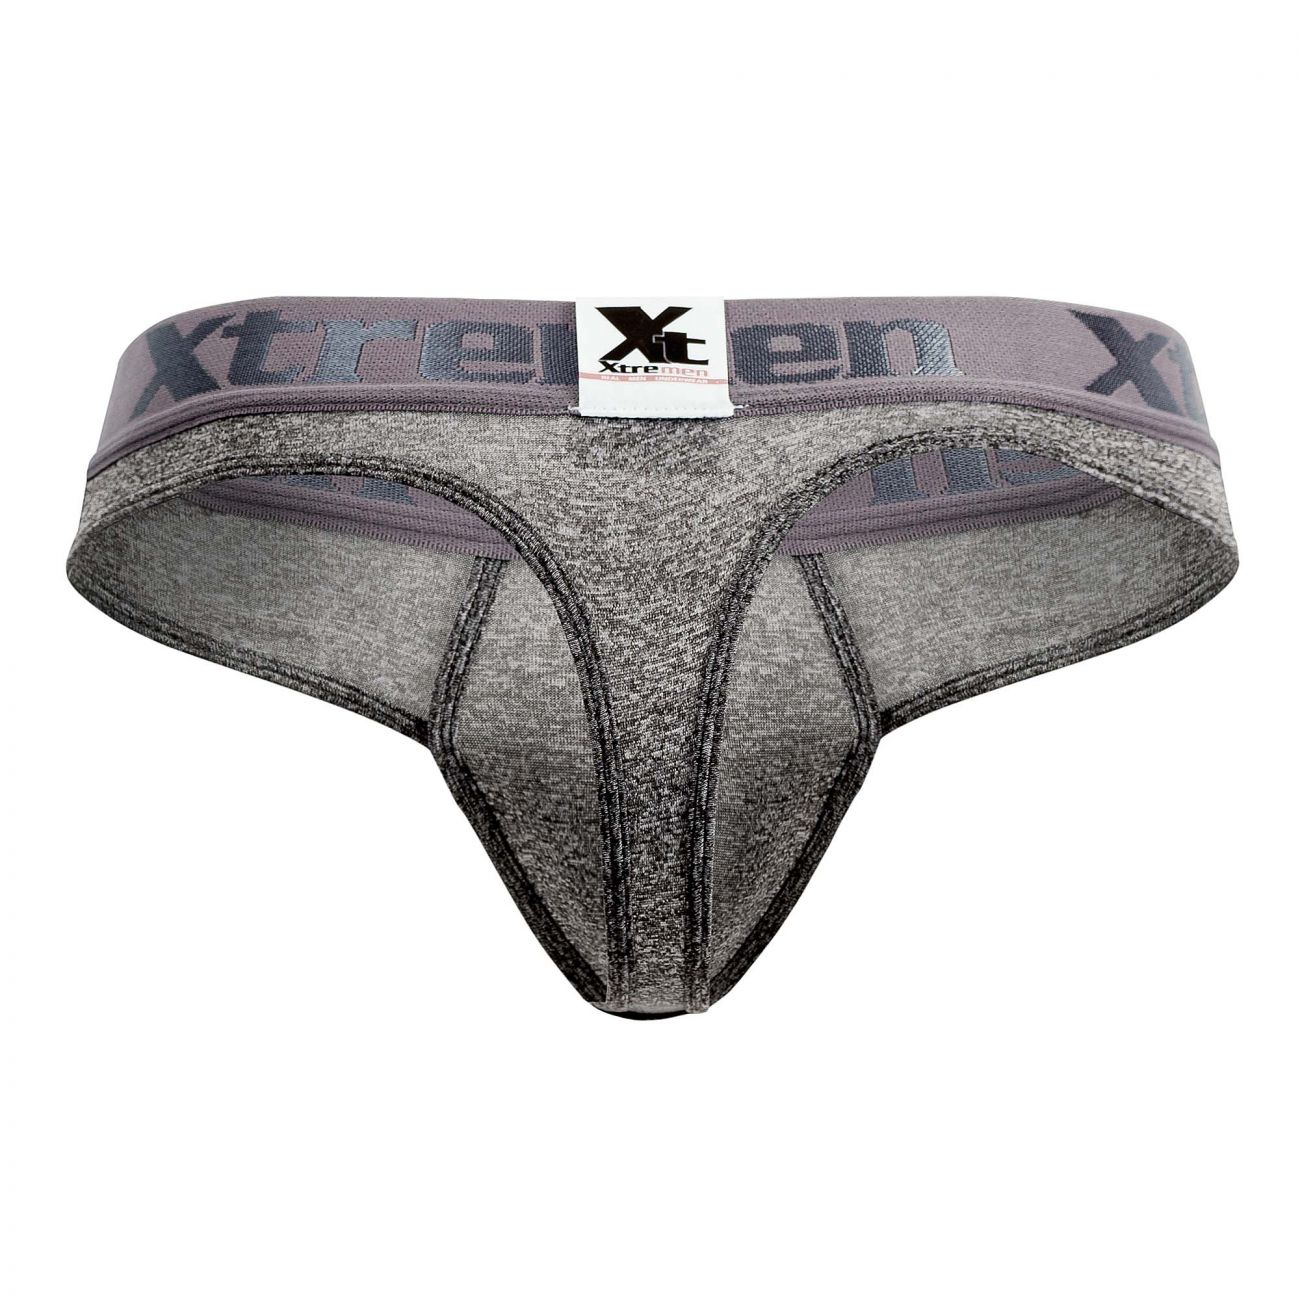 Mens Underwear: Xtremen 91031-3 3PK Piping Thongs | eBay